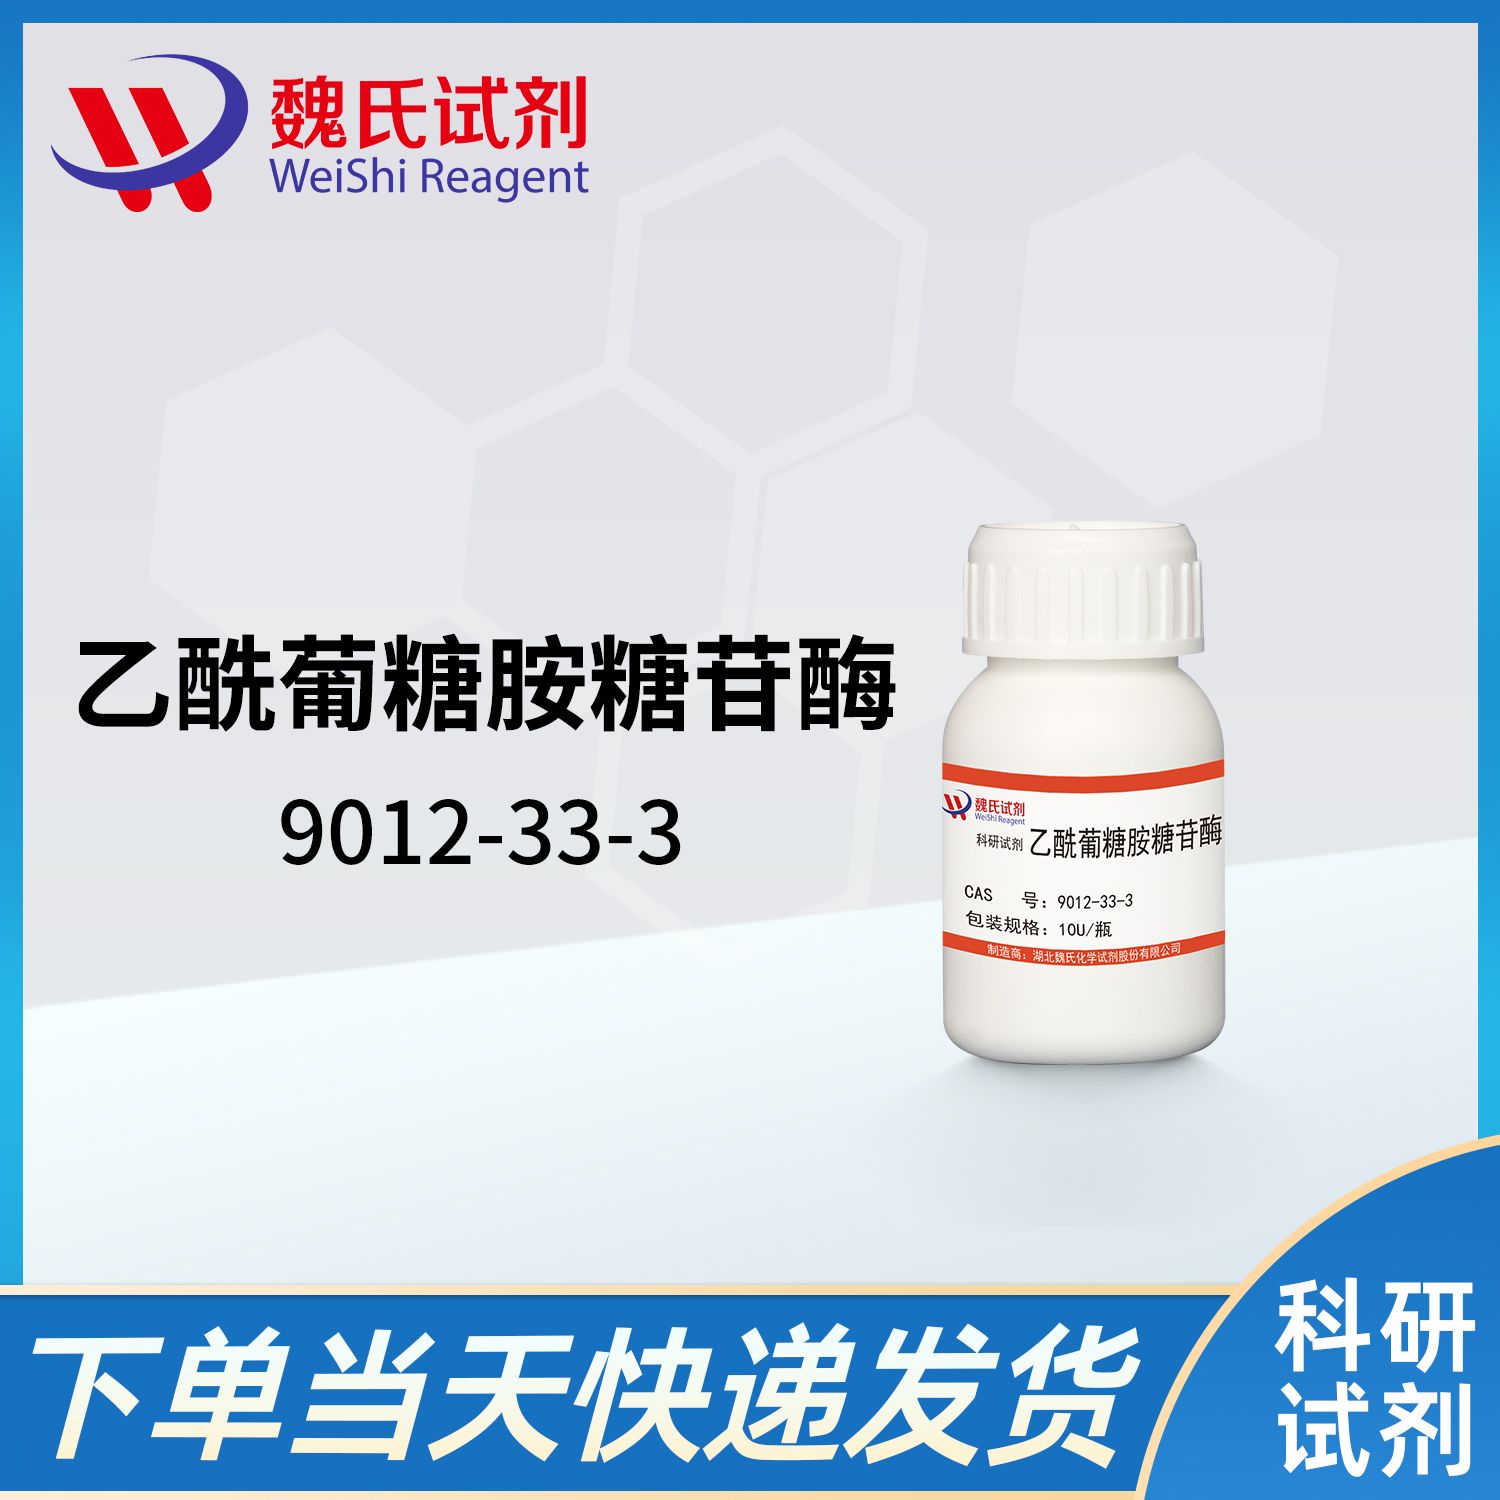 9012-33-3/乙酰葡糖胺糖苷酶/β-N-AcetylglucosaMinidase